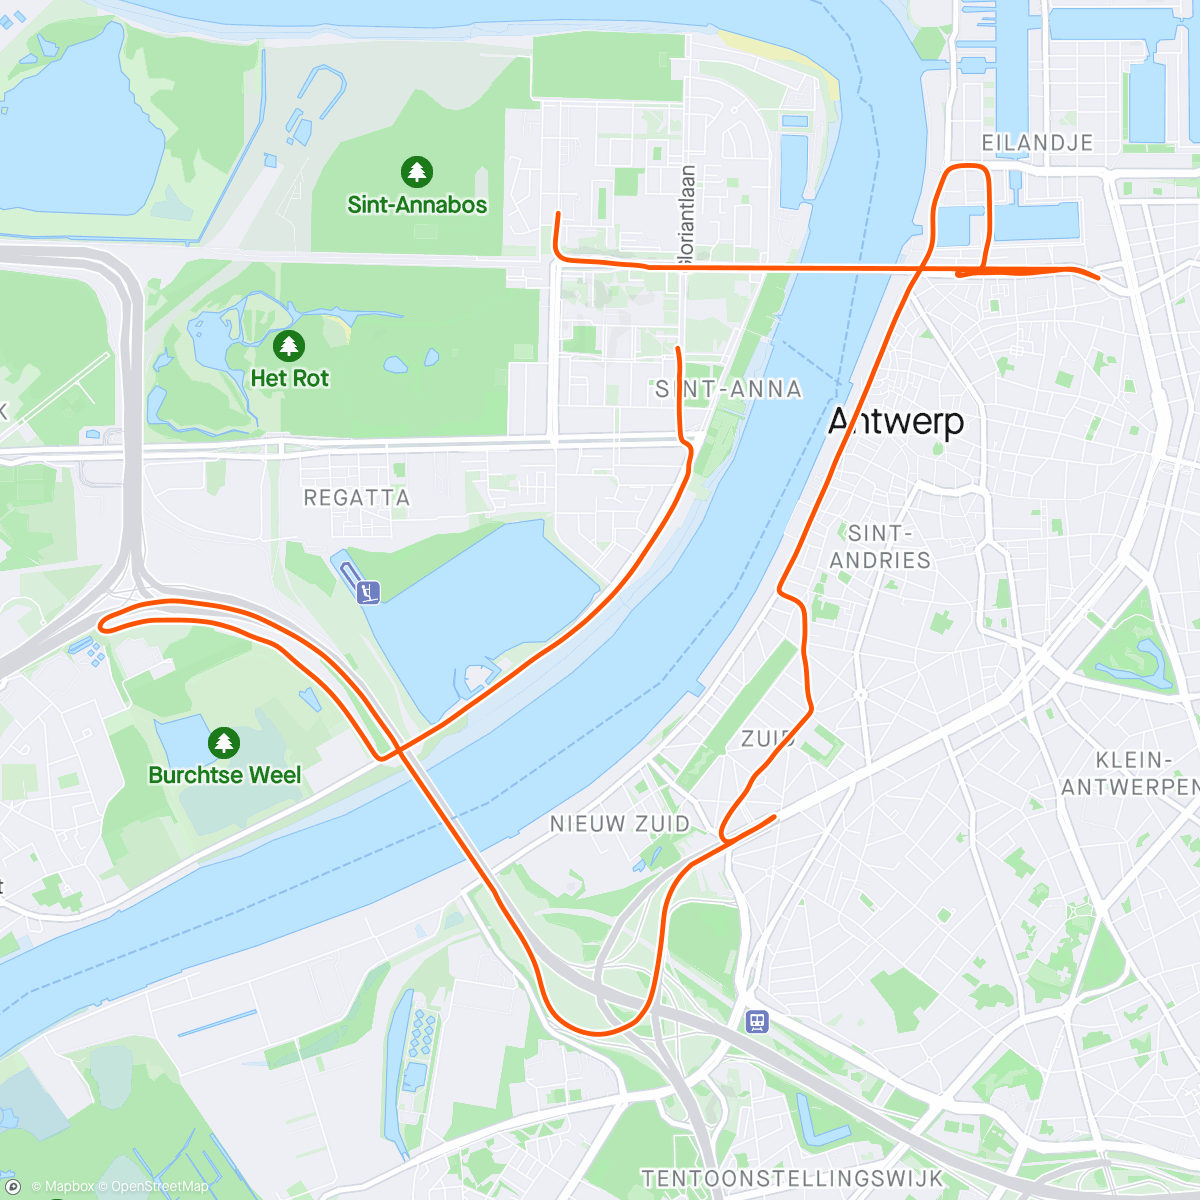 Mapa de la actividad (I0 Miles)